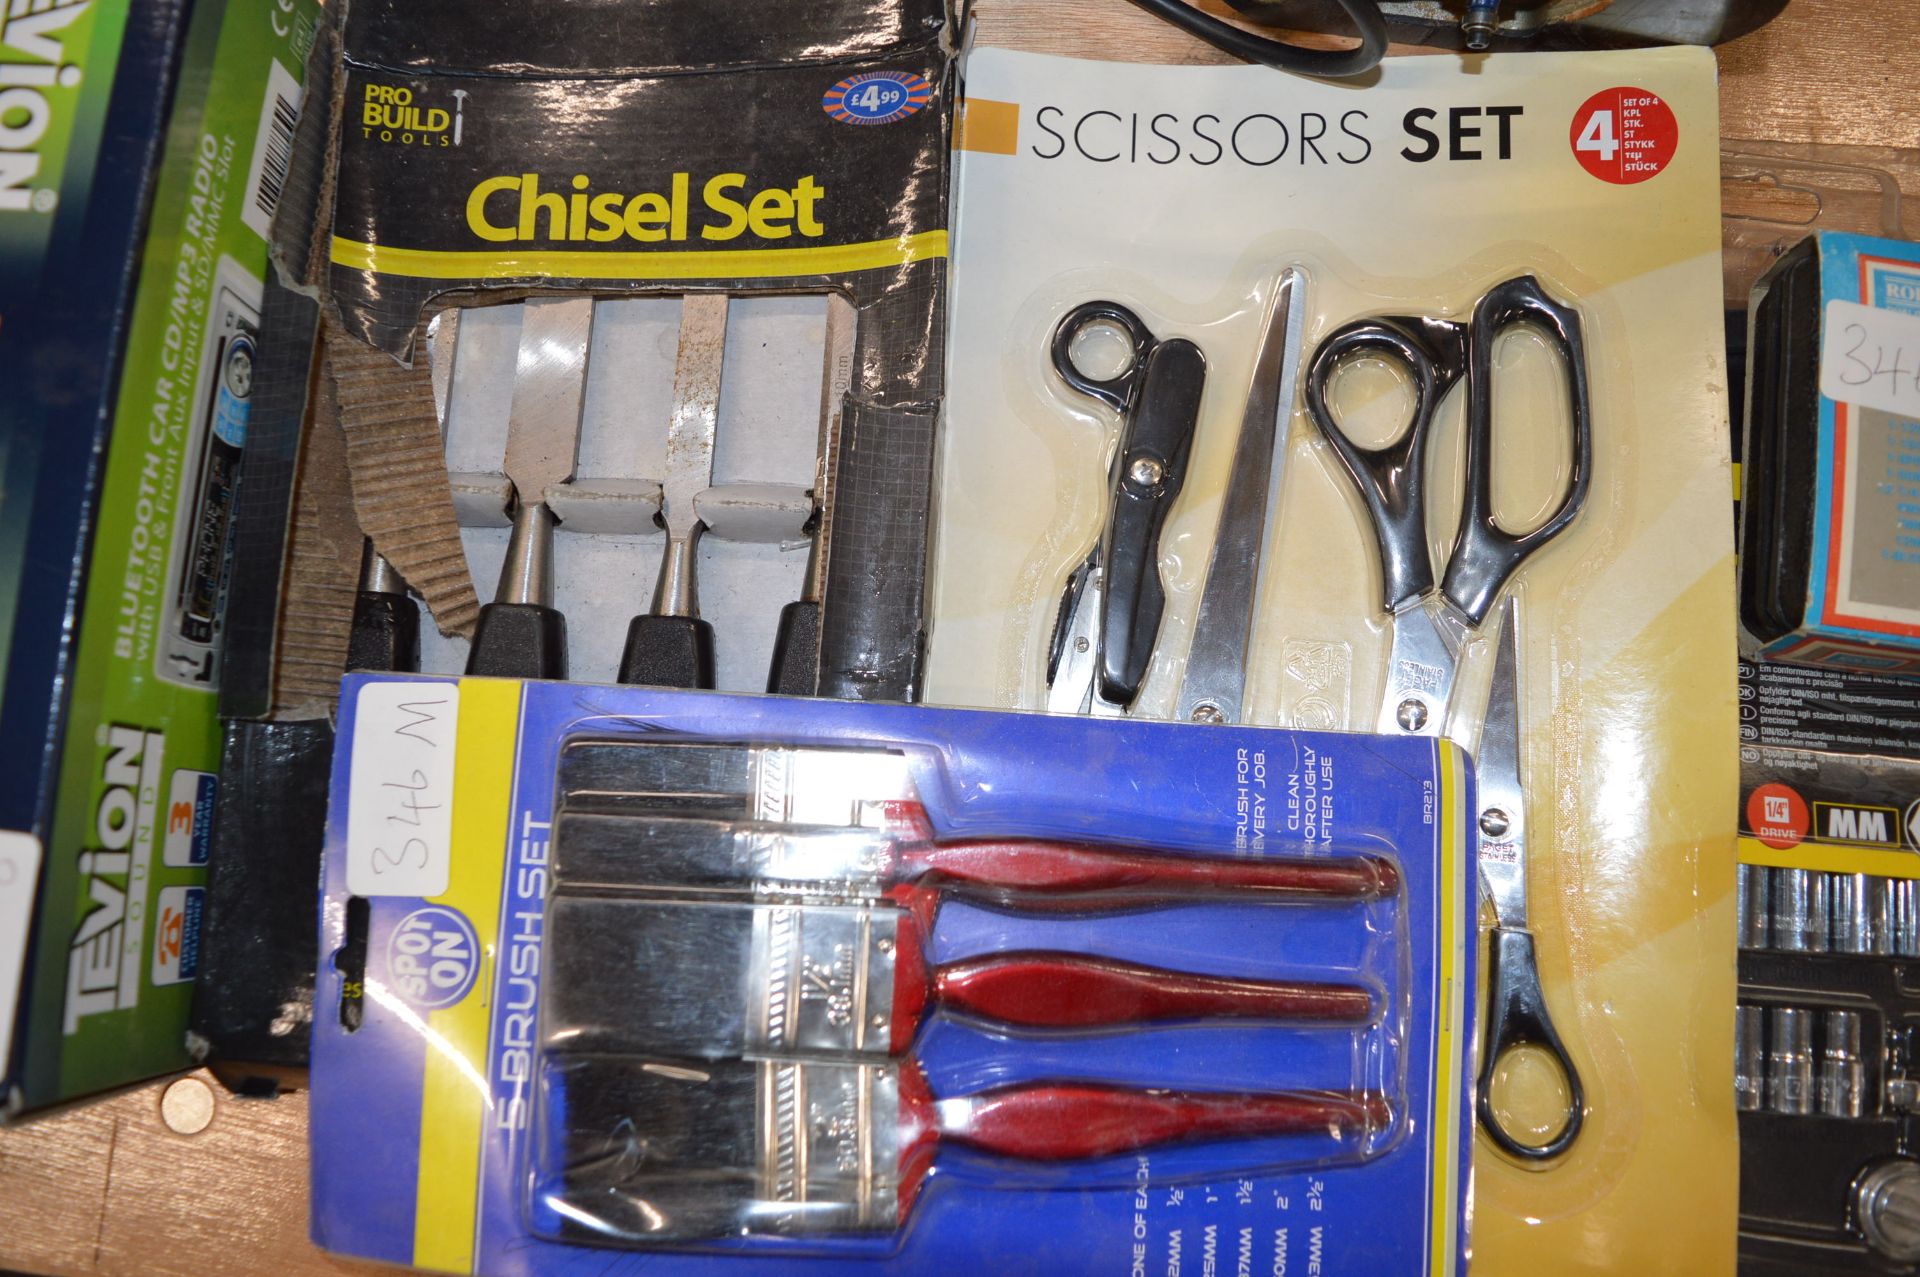 Brush Set, Scissor Set, and a Chisel Set